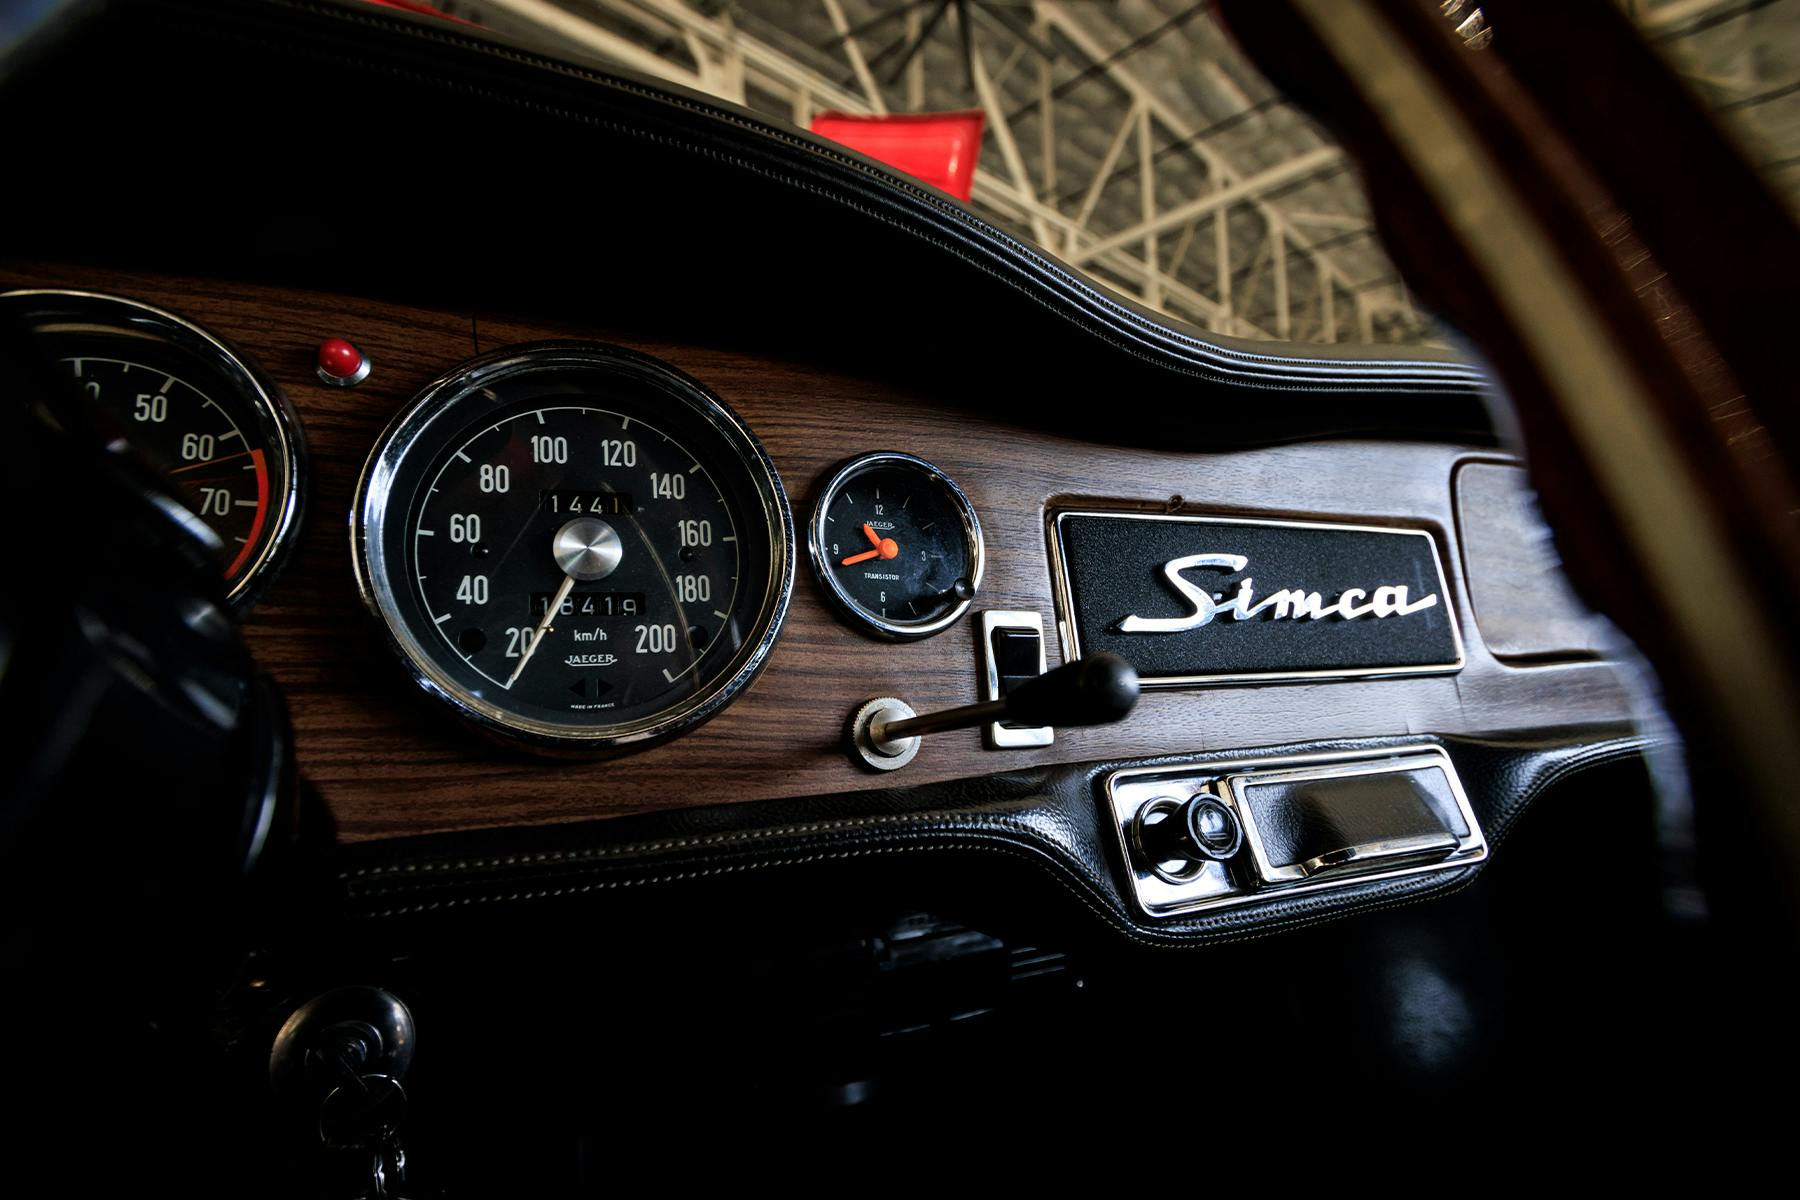 Simca 1200 S interior dash detail